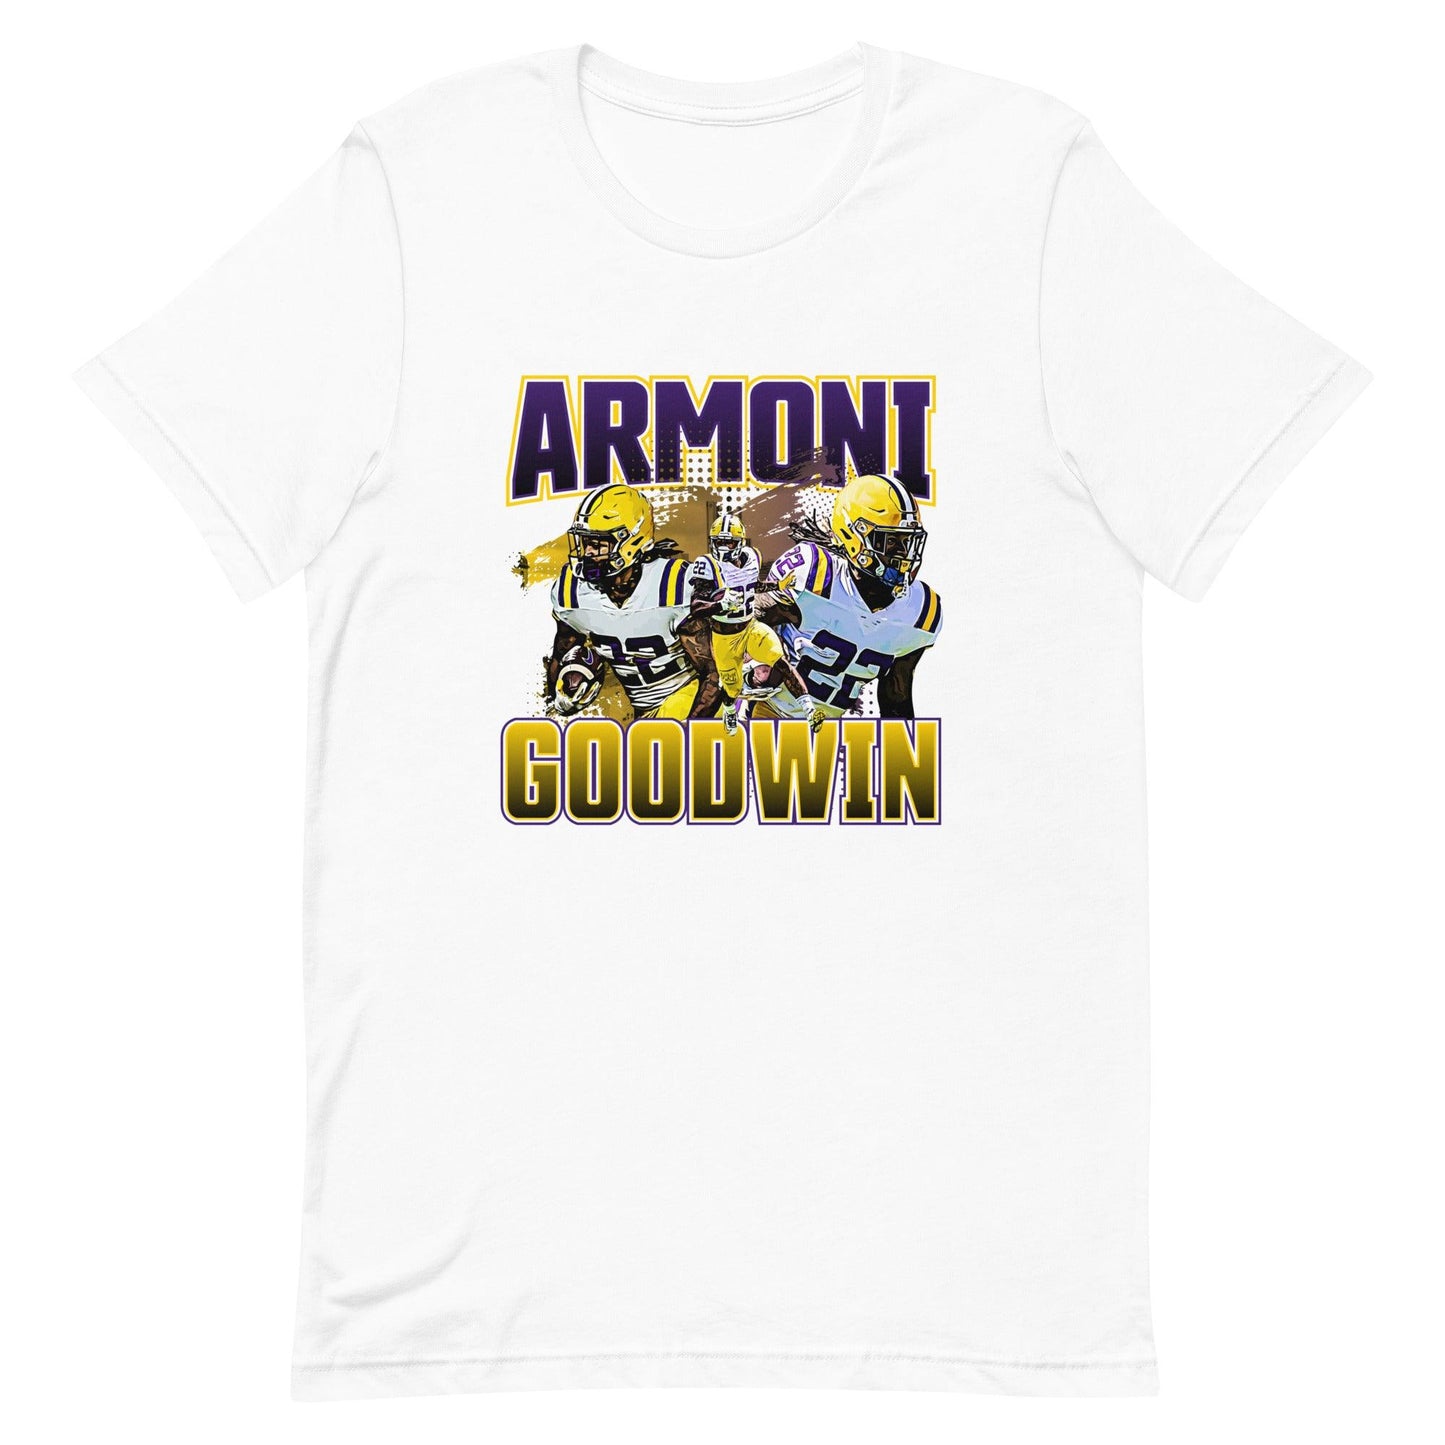 Armoni Goodwin "Vintage" t-shirt - Fan Arch